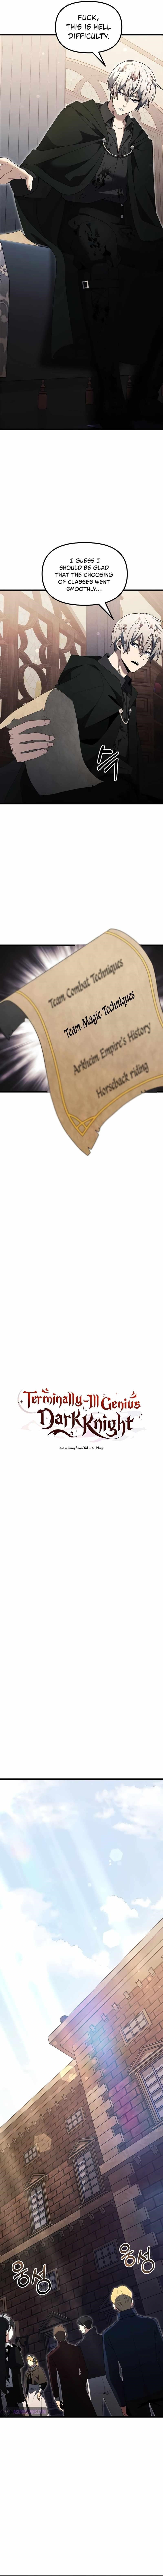 Terminally Ill Genius Dark Knight Chapter 47 scans online, Read Terminally Ill Genius Dark Knight Chapter 47 in english, read Terminally Ill Genius Dark Knight Chapter 47 for free, Terminally Ill Genius Dark Knight Chapter 47 void scans, Terminally Ill Genius Dark Knight Chapter 47 void scans, , Terminally Ill Genius Dark Knight Chapter 47 at void scans